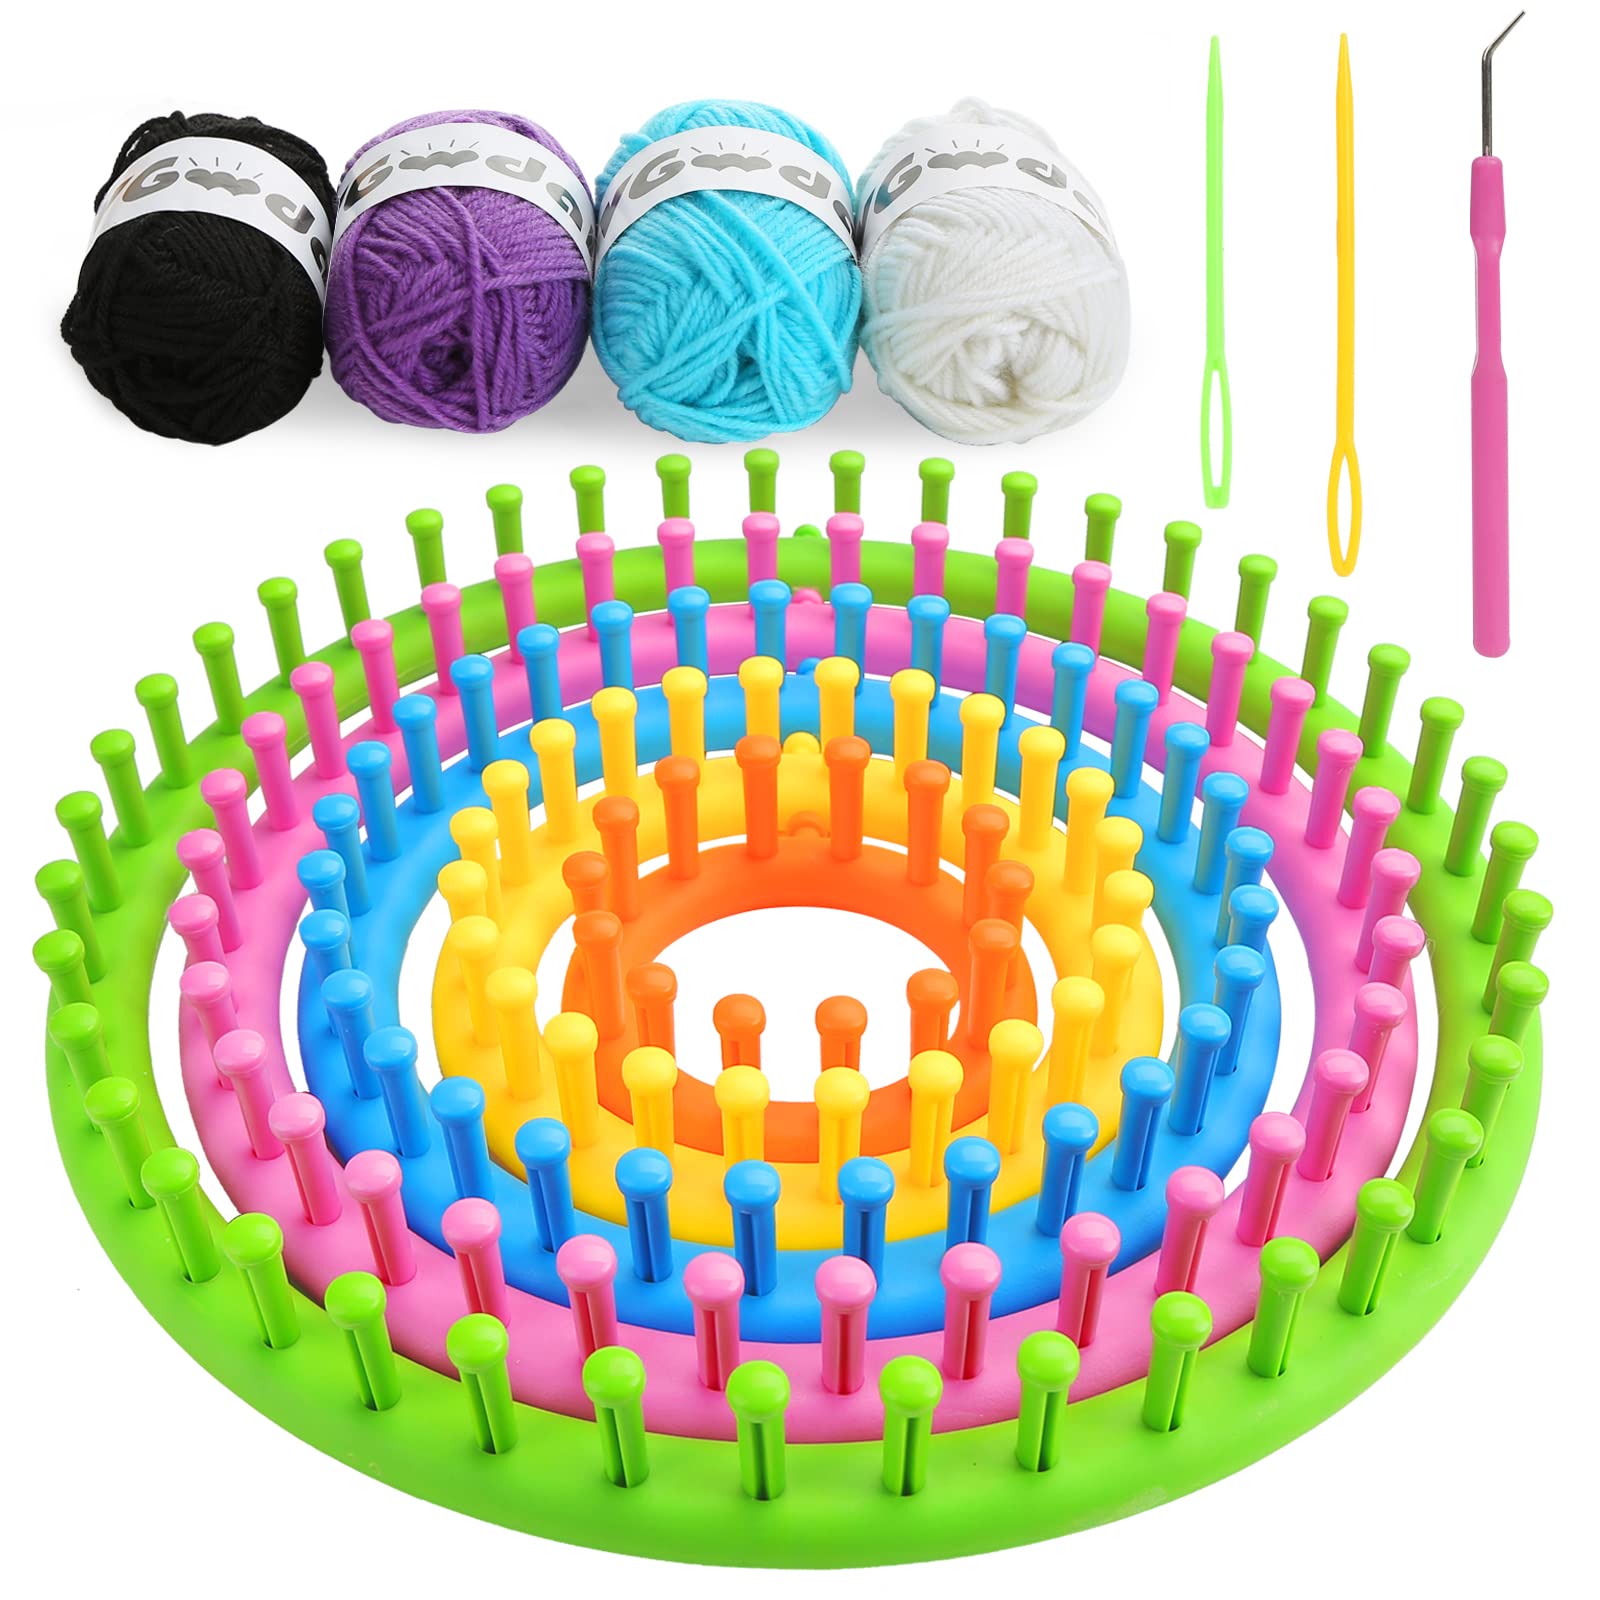 VGOODALL Pompom makers,4 Sizes Pom-Pom Maker Fluff Ball Waver with 12 Skeins Acrylic Yarn for DIY Wool Yarn Crochet Knitting